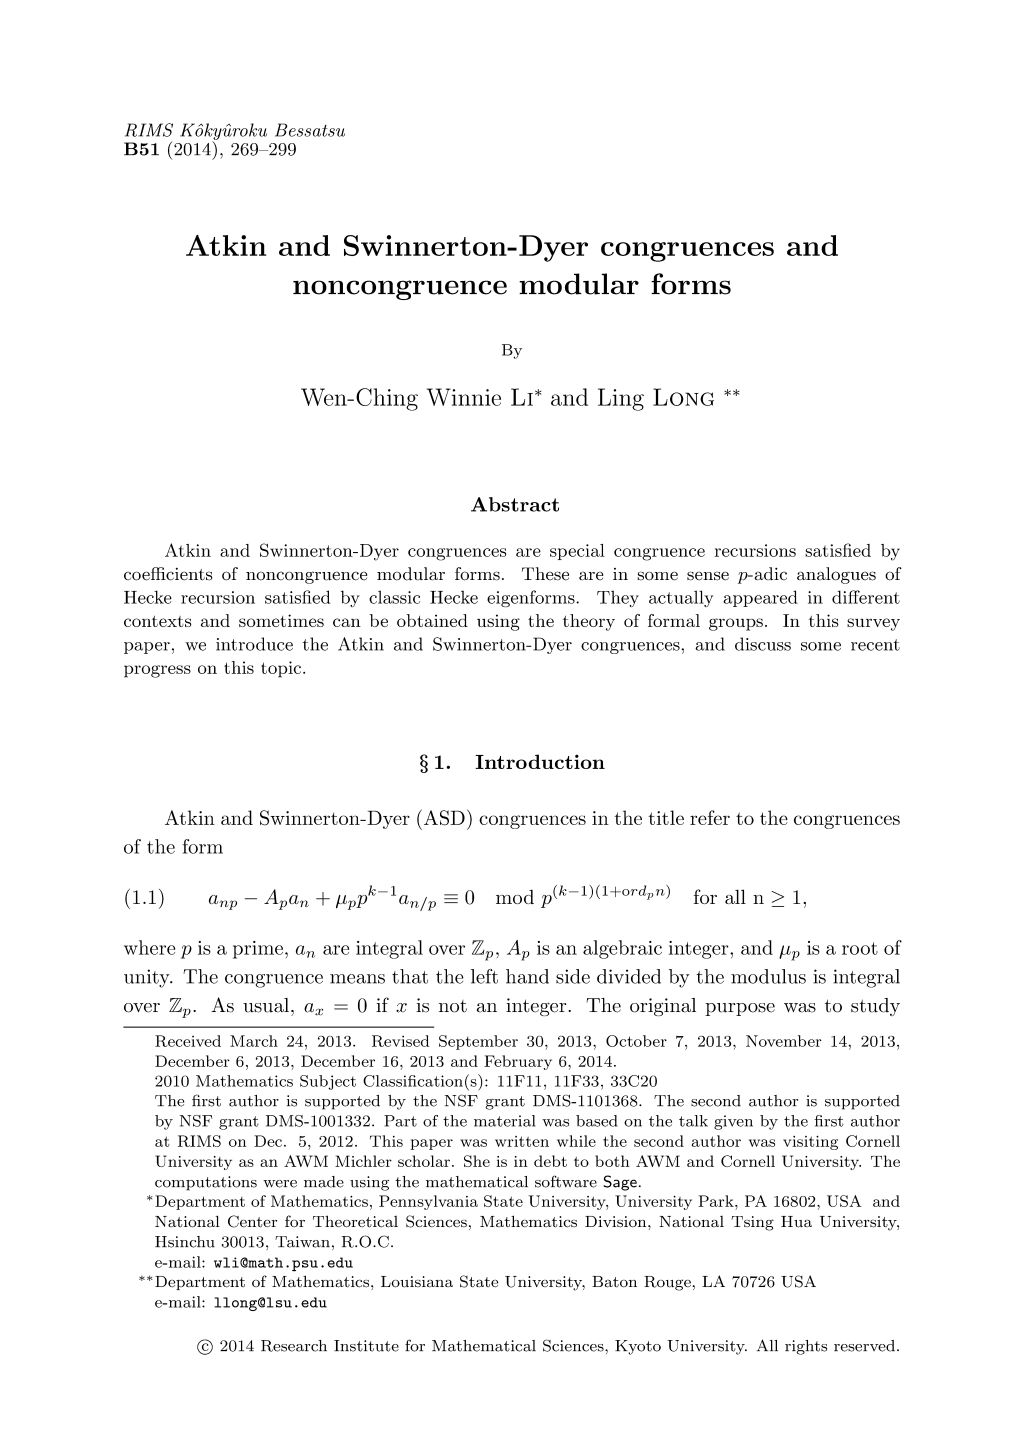 Atkin and Swinnerton‐Dyer Congruences and Noncongruence Modular Forms